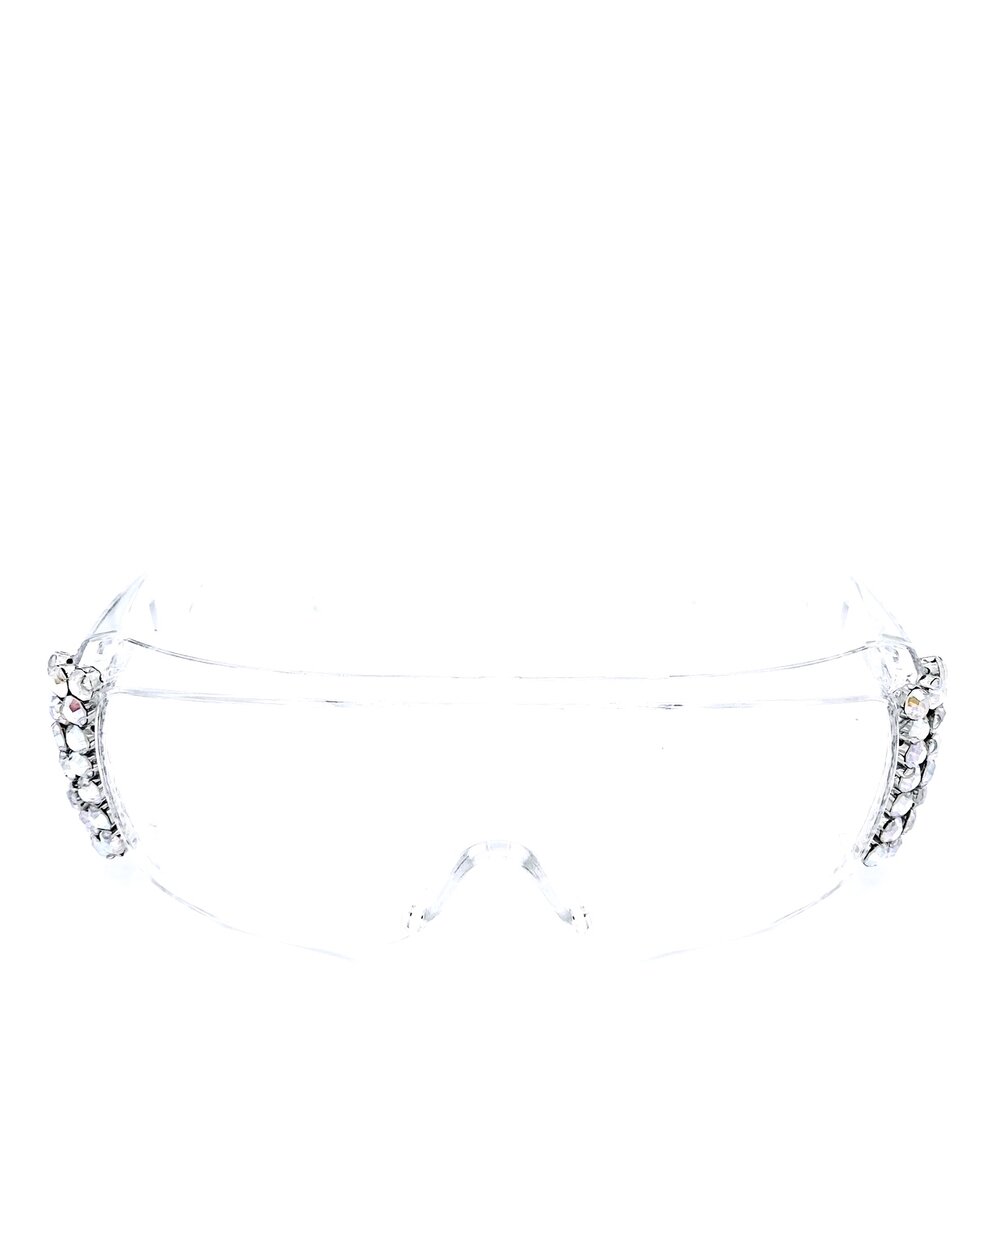 GLINDAR Polarized Shield Sunglasses for Men, Oversized Square Flat Top Sports Glasses